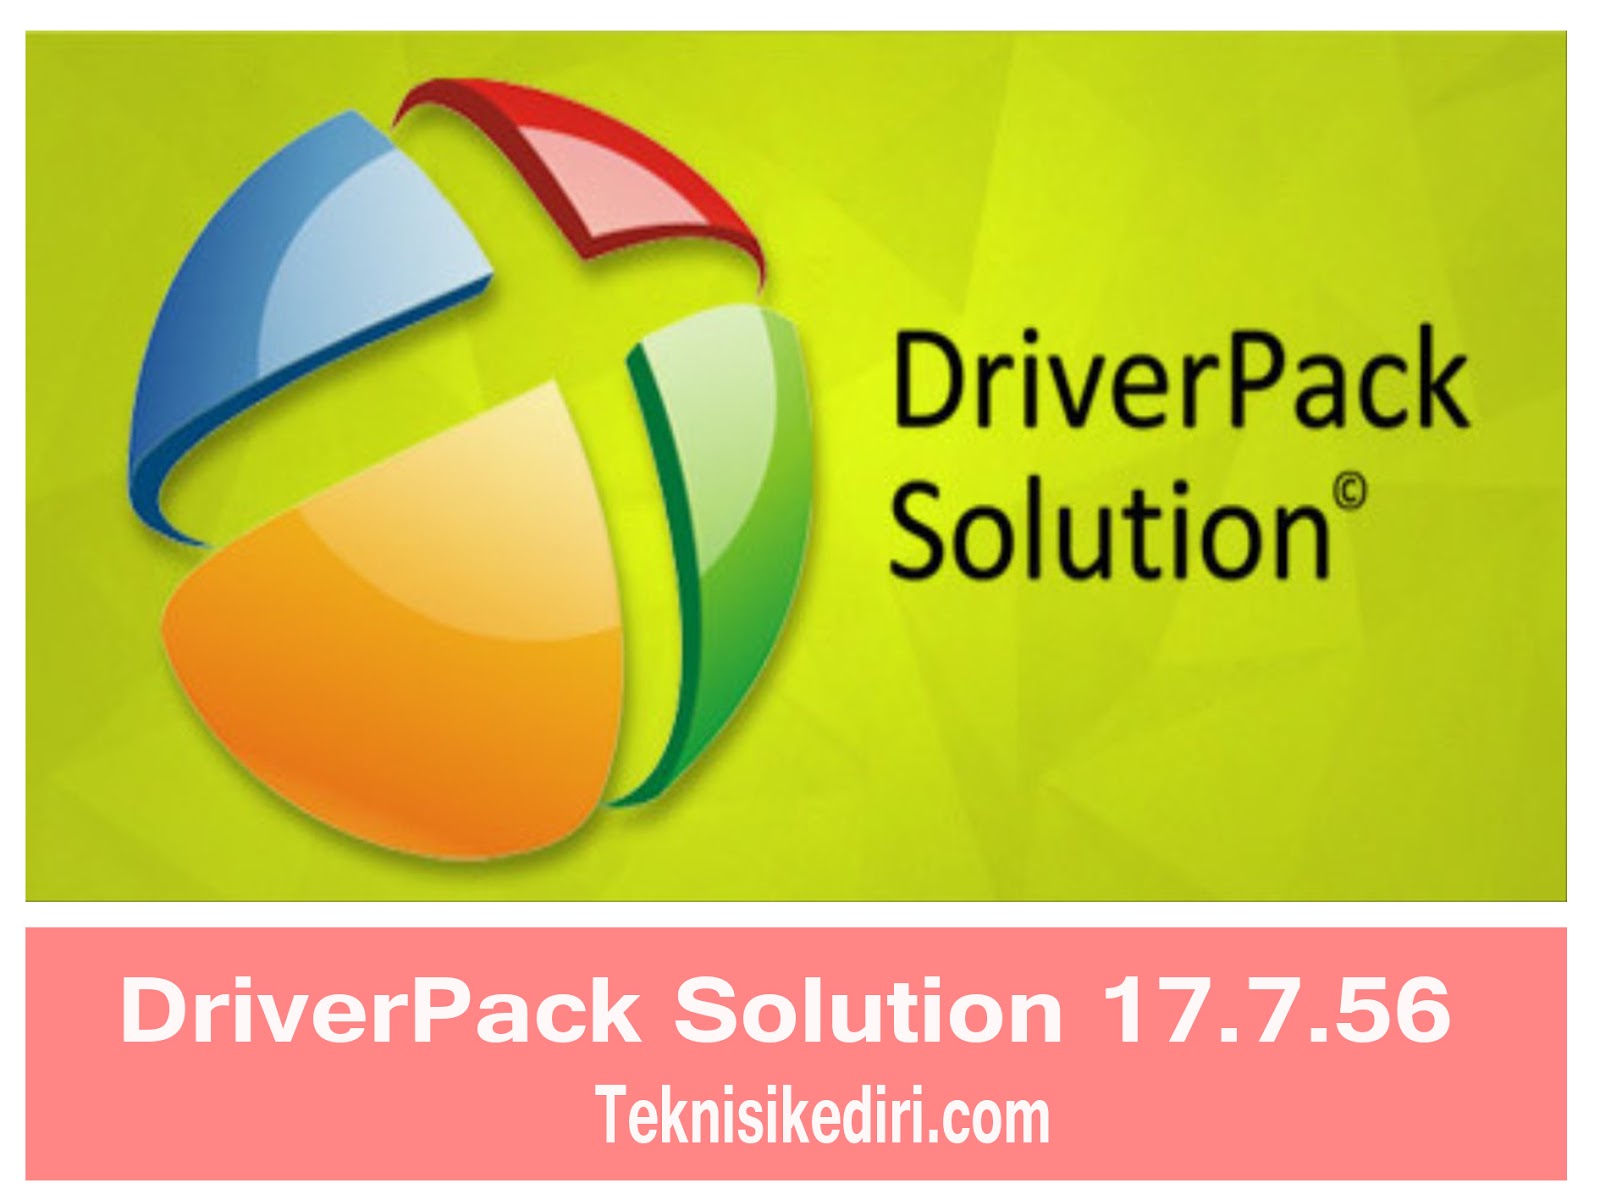 Драйвер пак 2024. DRIVERPACK solution. DRIVERPACK solution логотип. DRIVERPACK solution 2017. DRIVERPACK картинки.